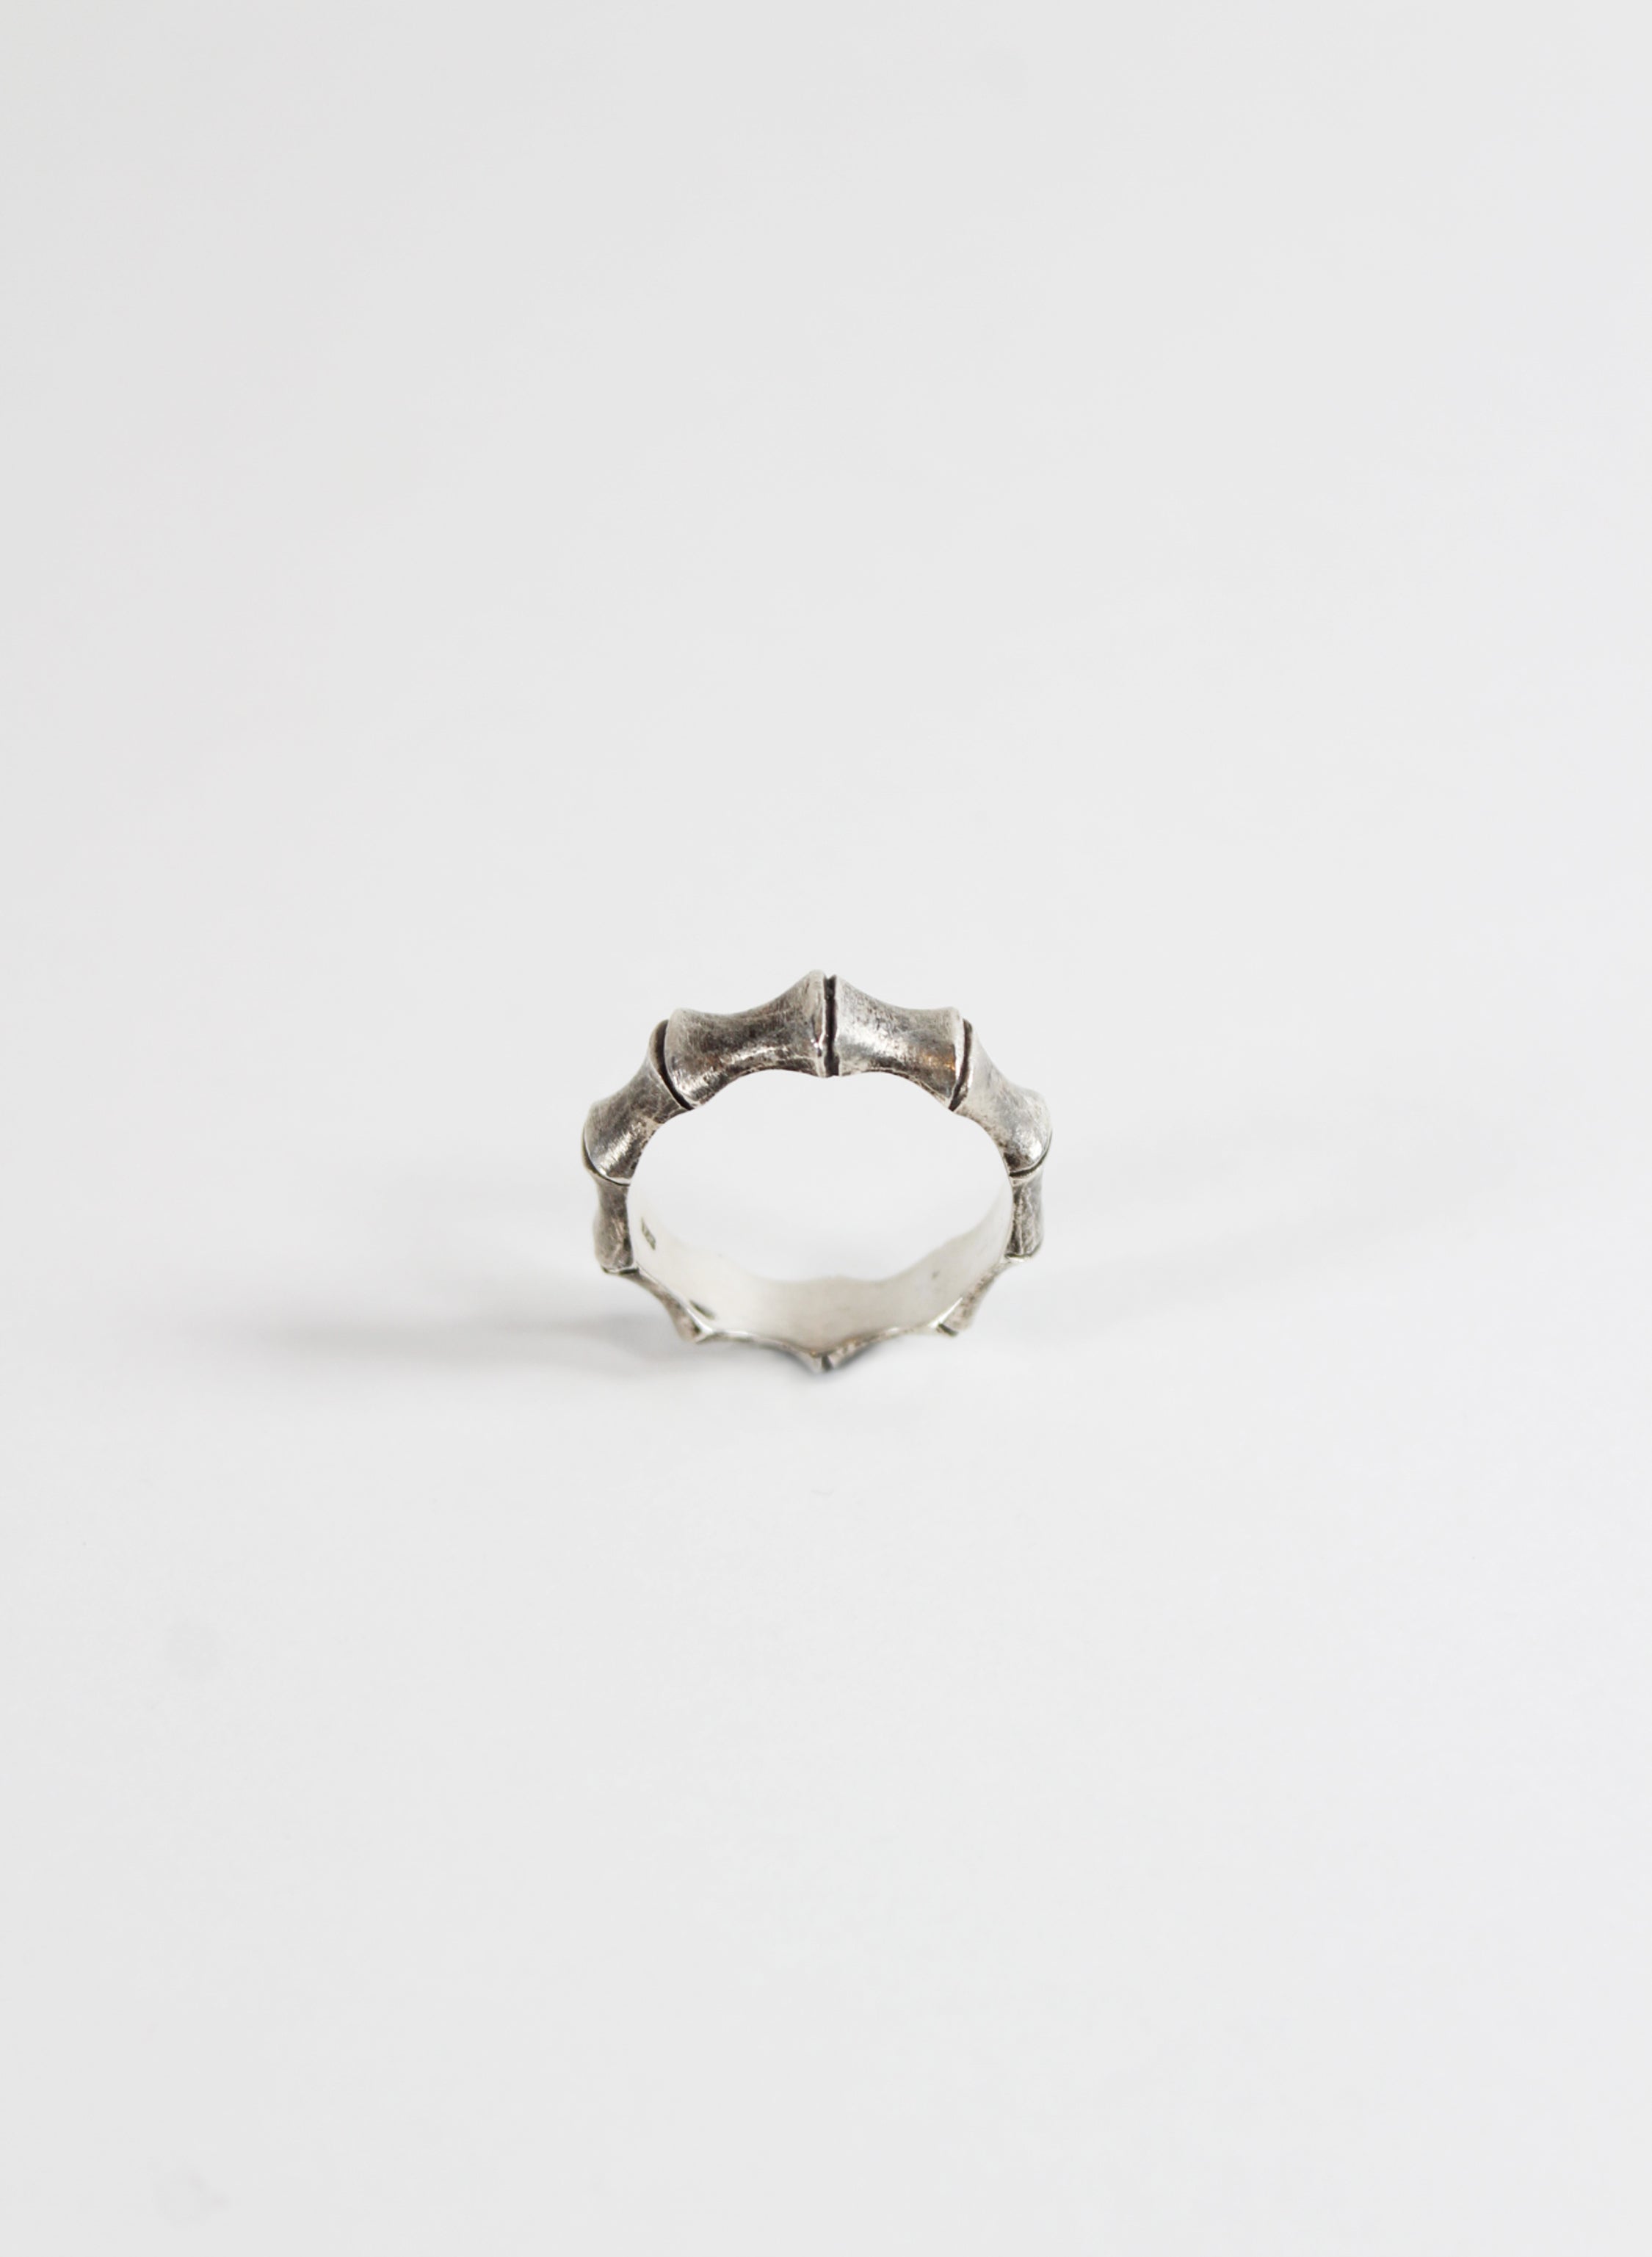 Tuaiwi (10 Segment) - Sterling Silver Ring